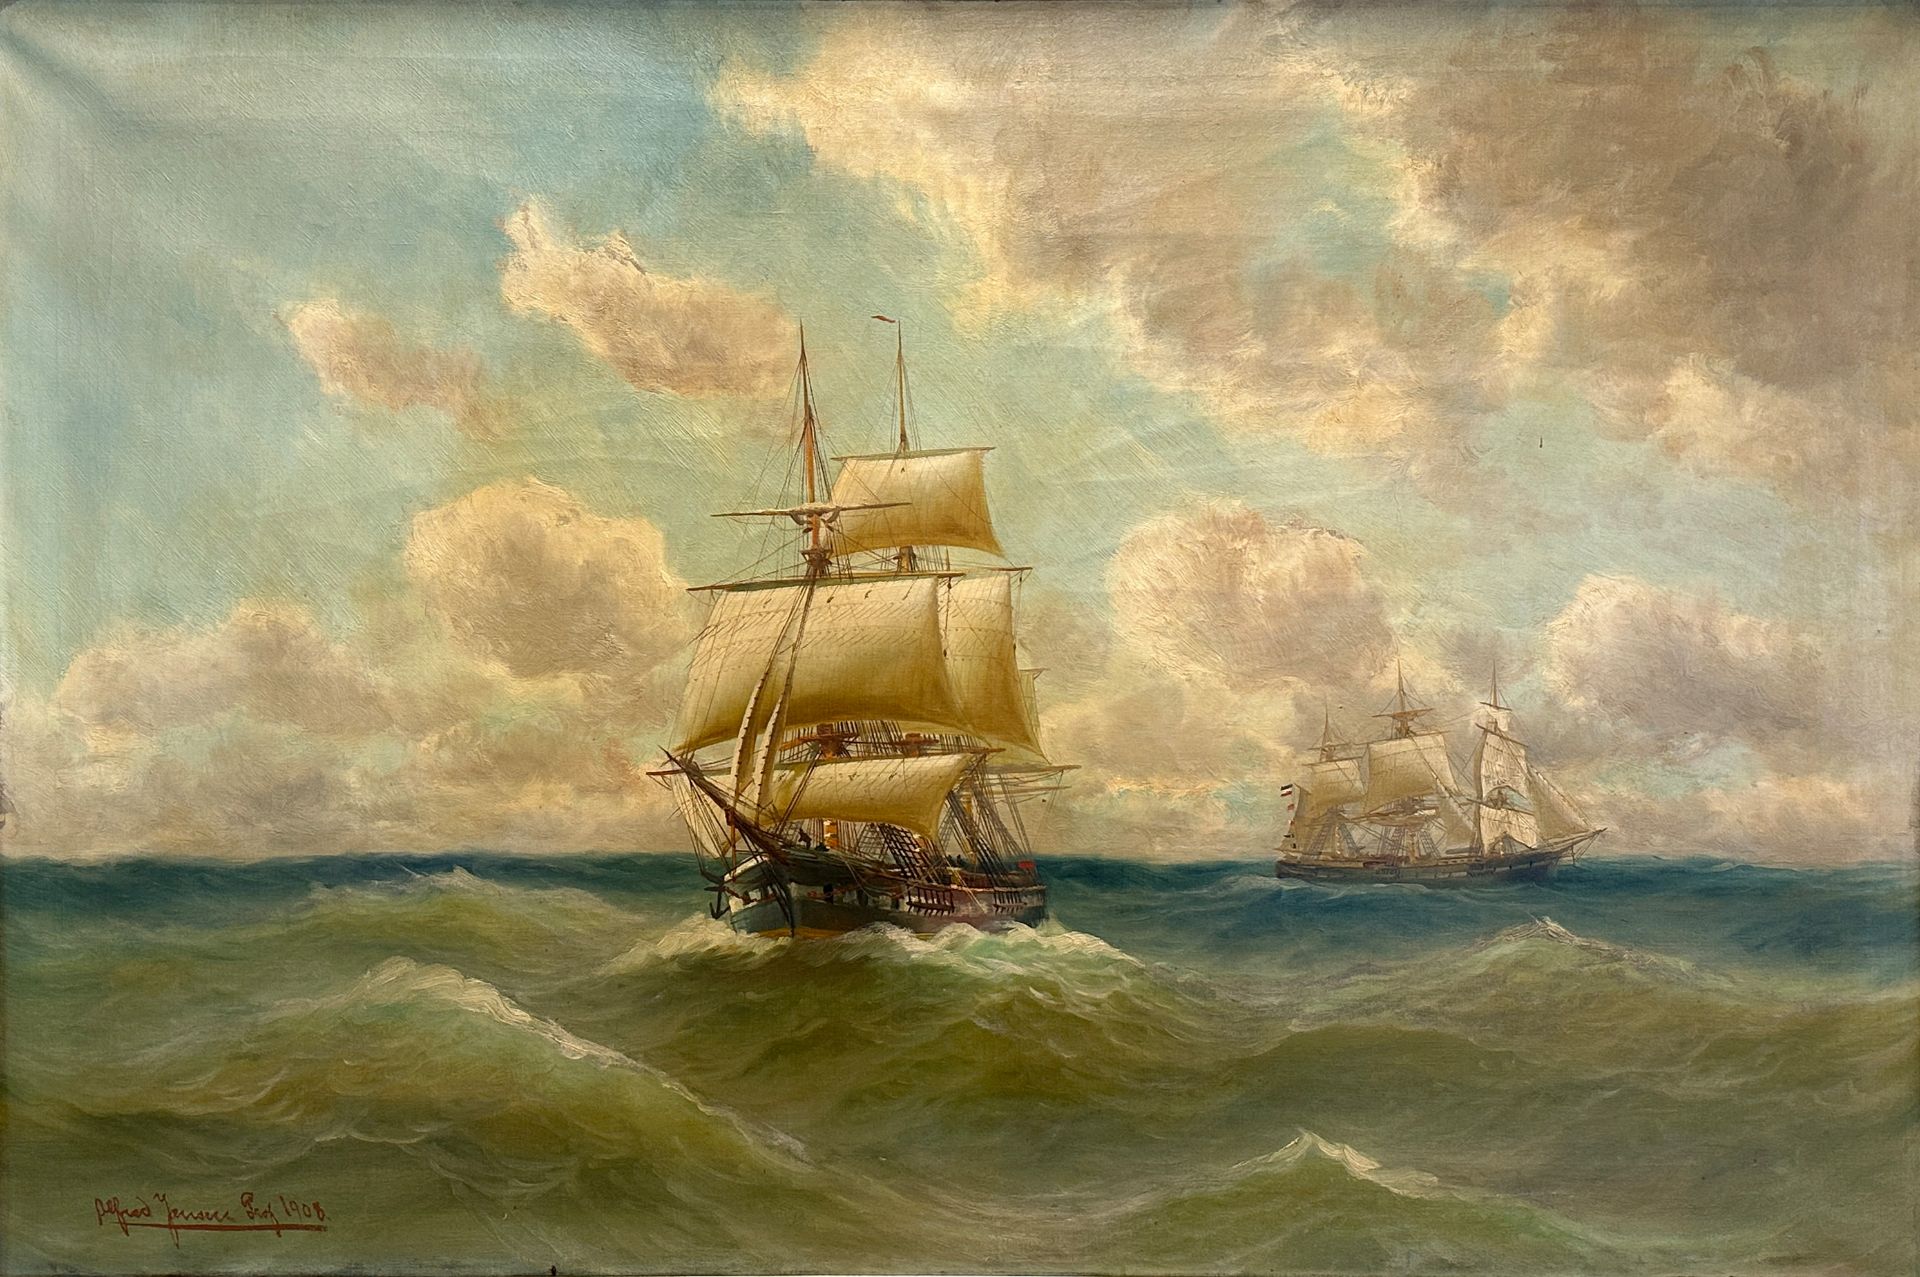 Alfred JENSEN (1859 - 1935). Sailing ships. 1908.